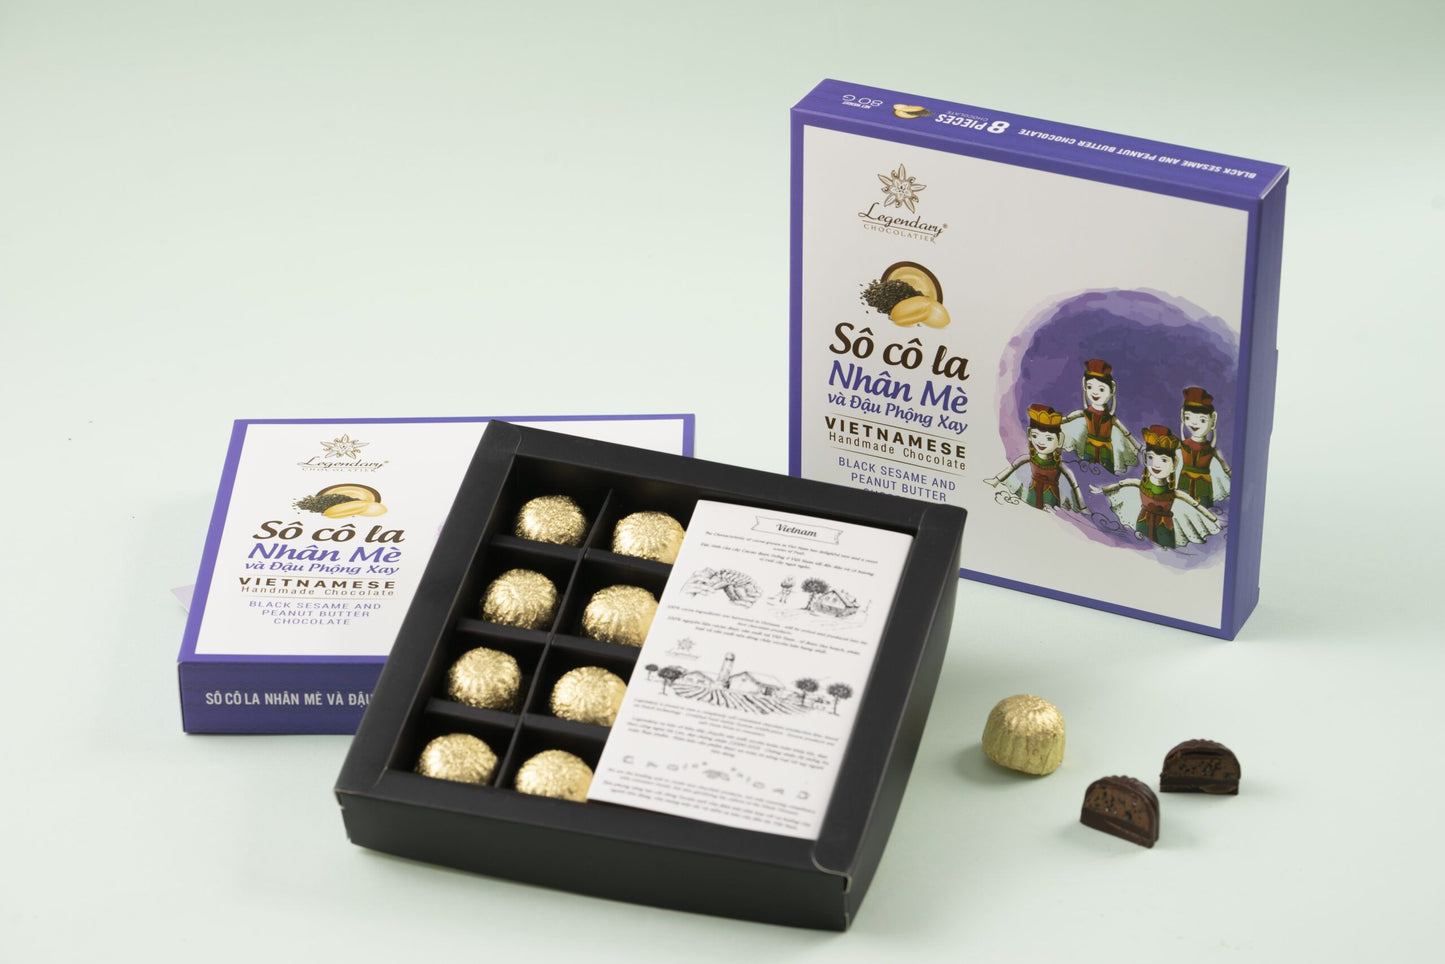 Legendary Chocolatier – Black Sesame And Peanut Butter Chocolate– Vietnam Zoom Gift Sets 8 Pieces